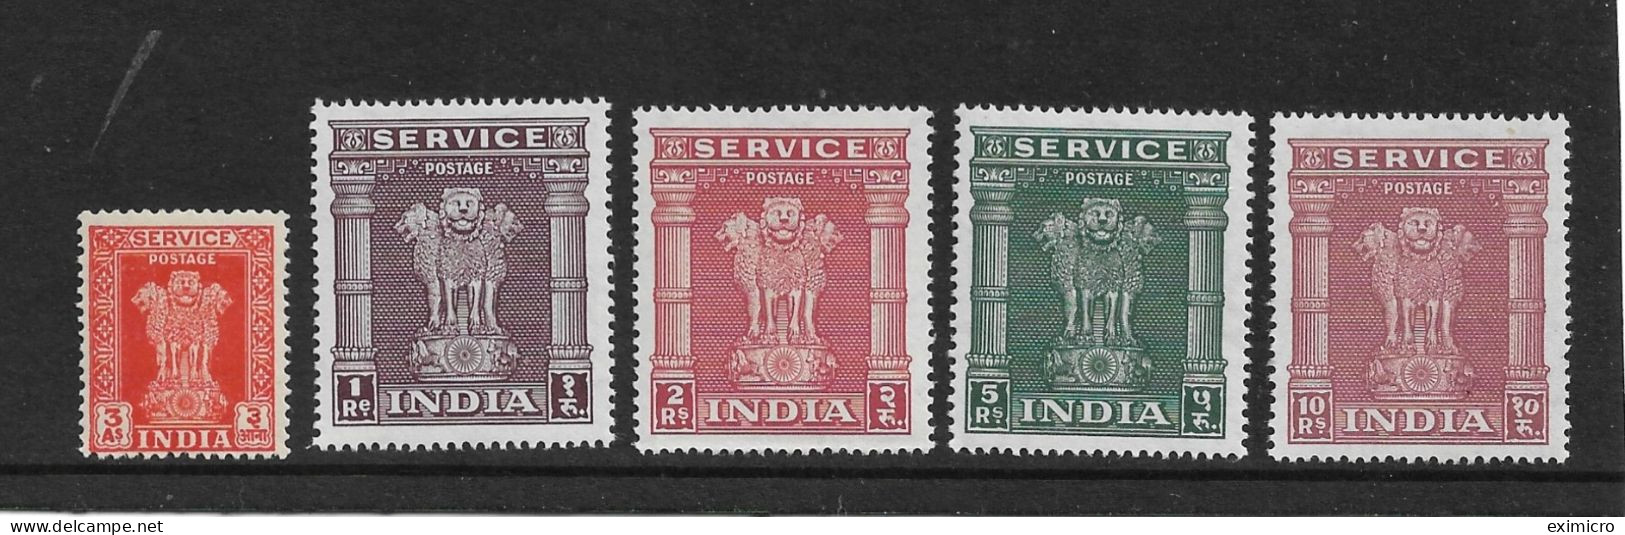 INDIA 1950 - 1951 OFFICIALS 3a, 1R - 10R SG O156, O161 - O164 UNMOUNTED MINT Cat £27.75 - Dienstzegels